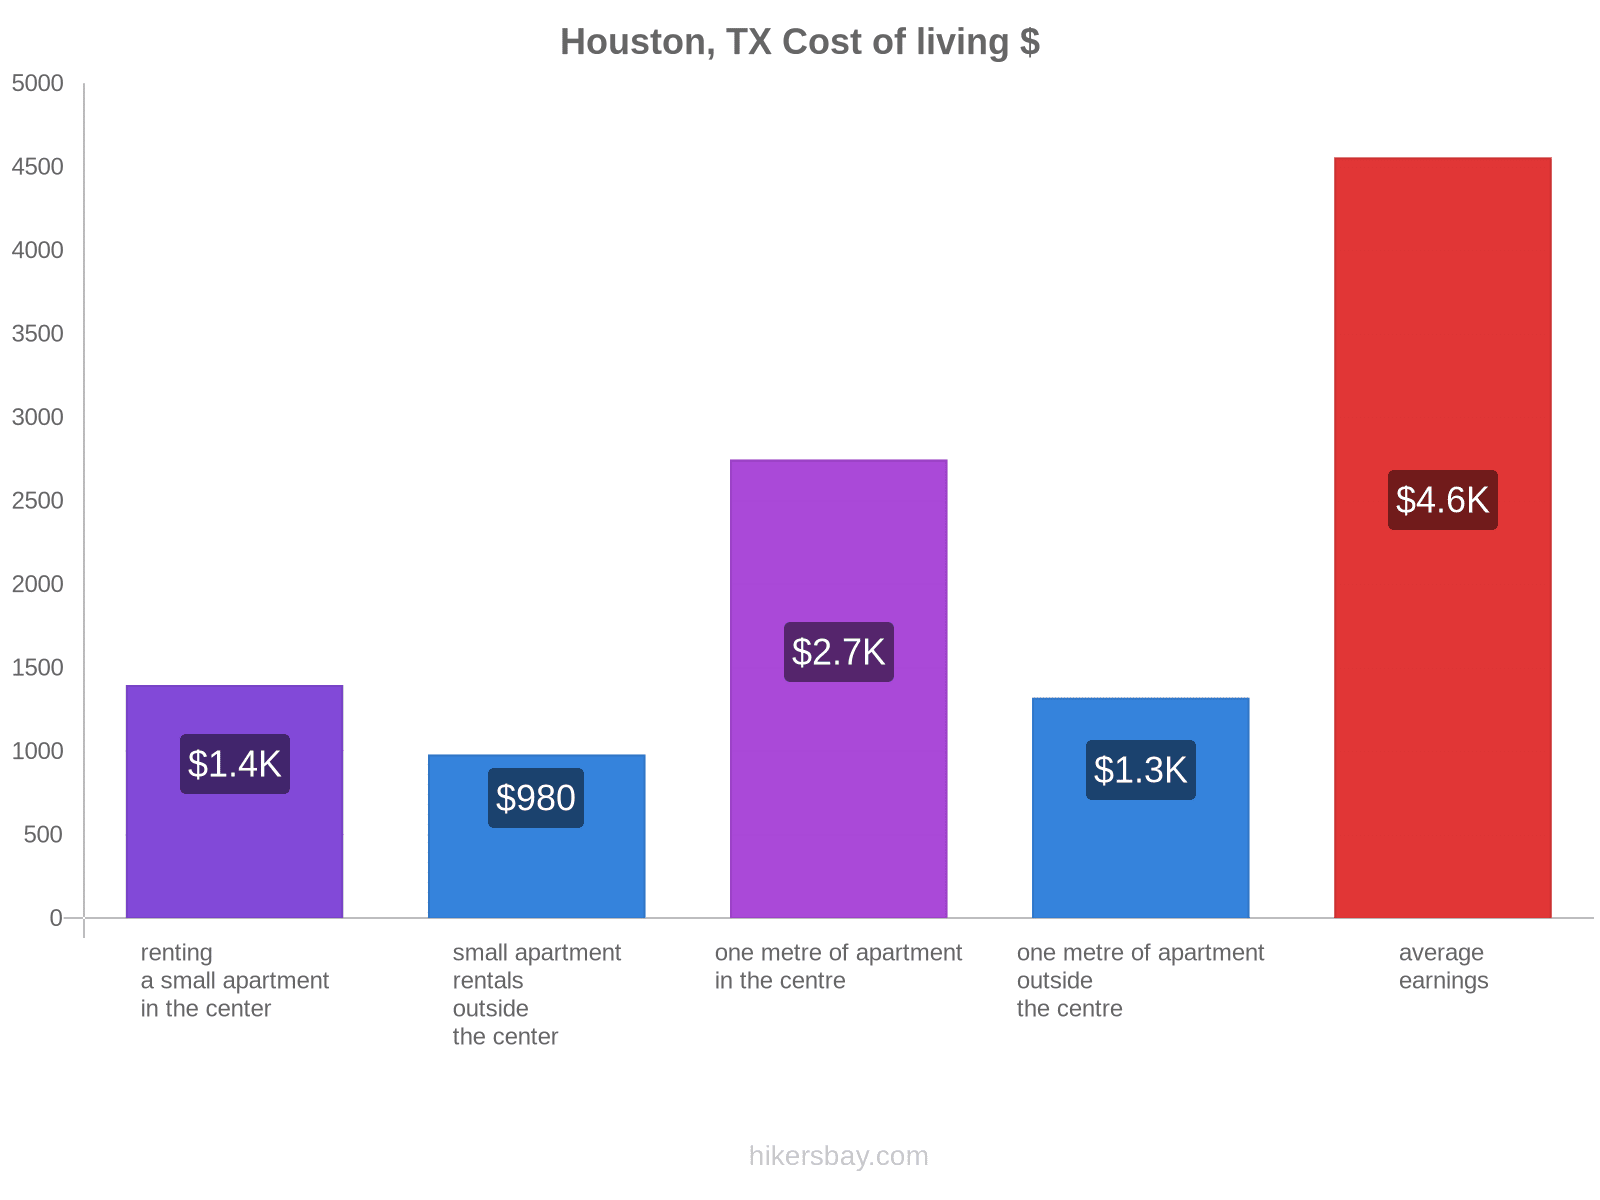 Houston, TX cost of living hikersbay.com